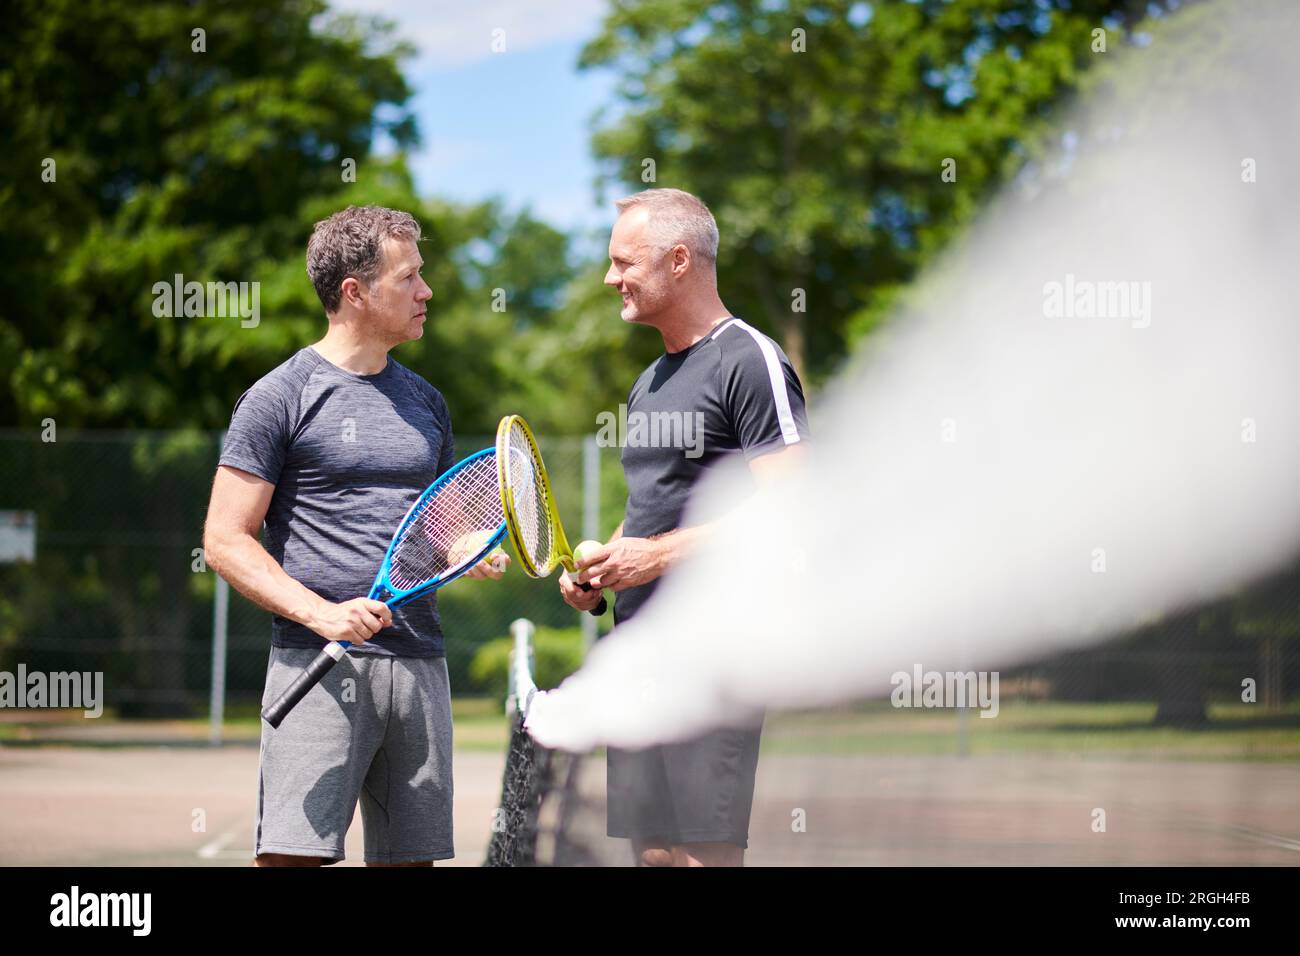 Reife Männer auf dem Tennisplatz Stockfoto